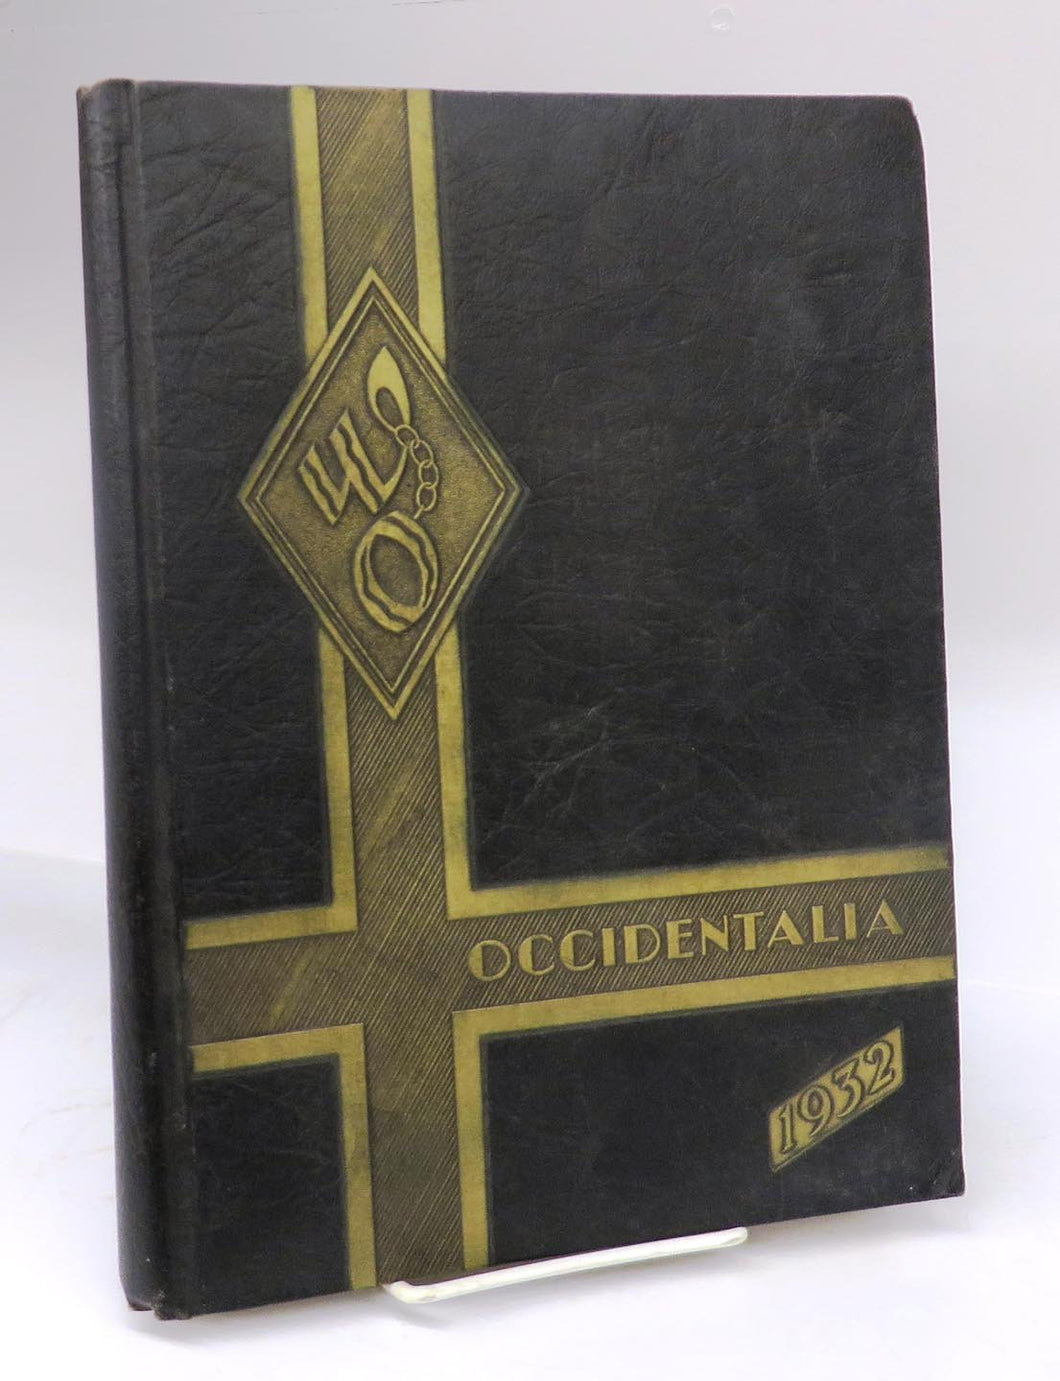 The Occidentalia 1932